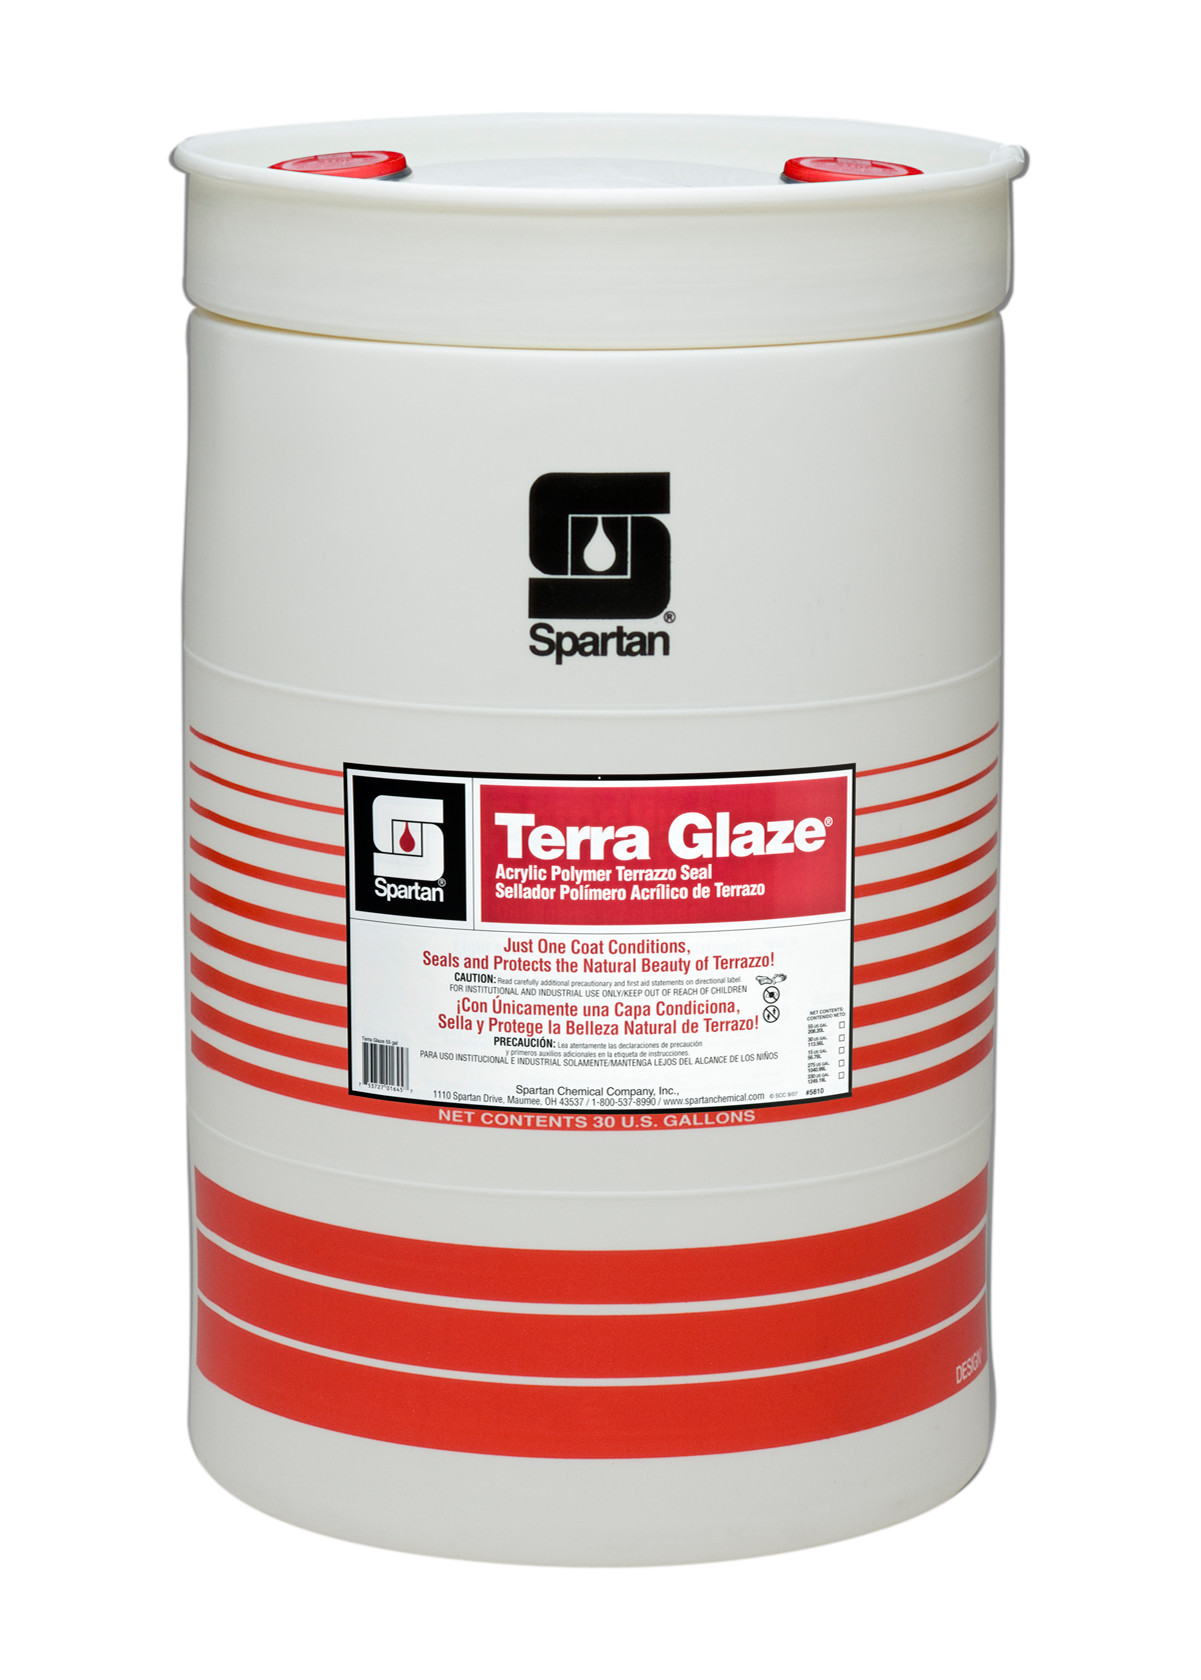 Spartan Chemical Company Terra Glaze, 30 GAL DRUM